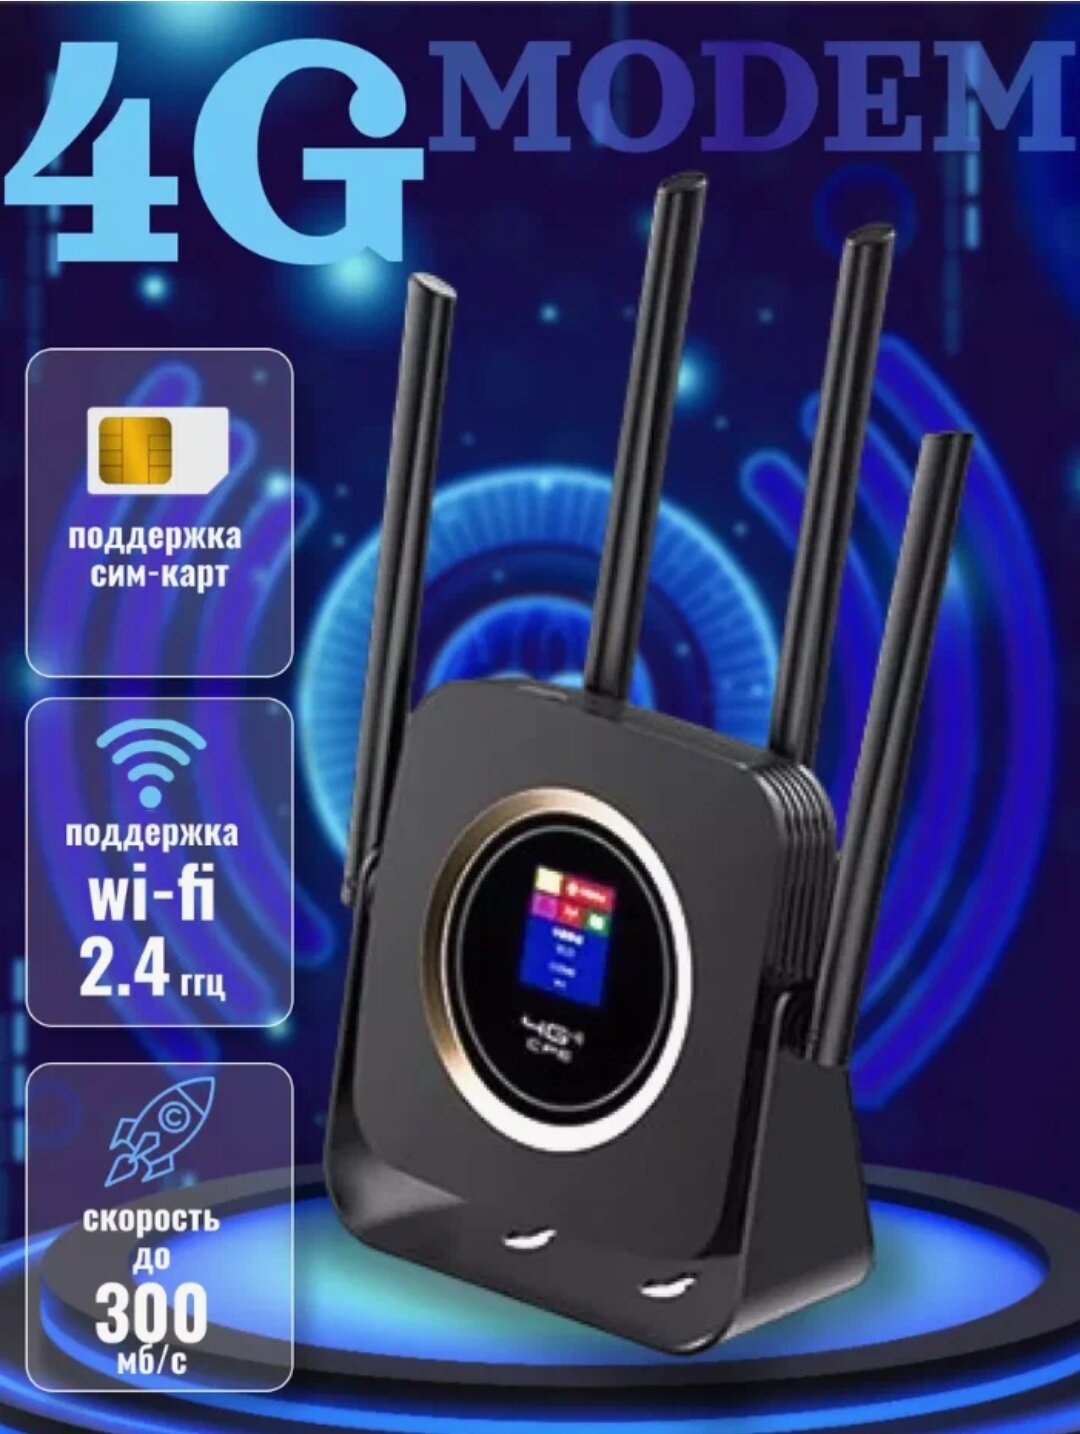 4G Wi-FI роутер Olax CPF 903-B, аккумулятор 3000 мАч, 300 Мбит/с, работает со всеми операторами